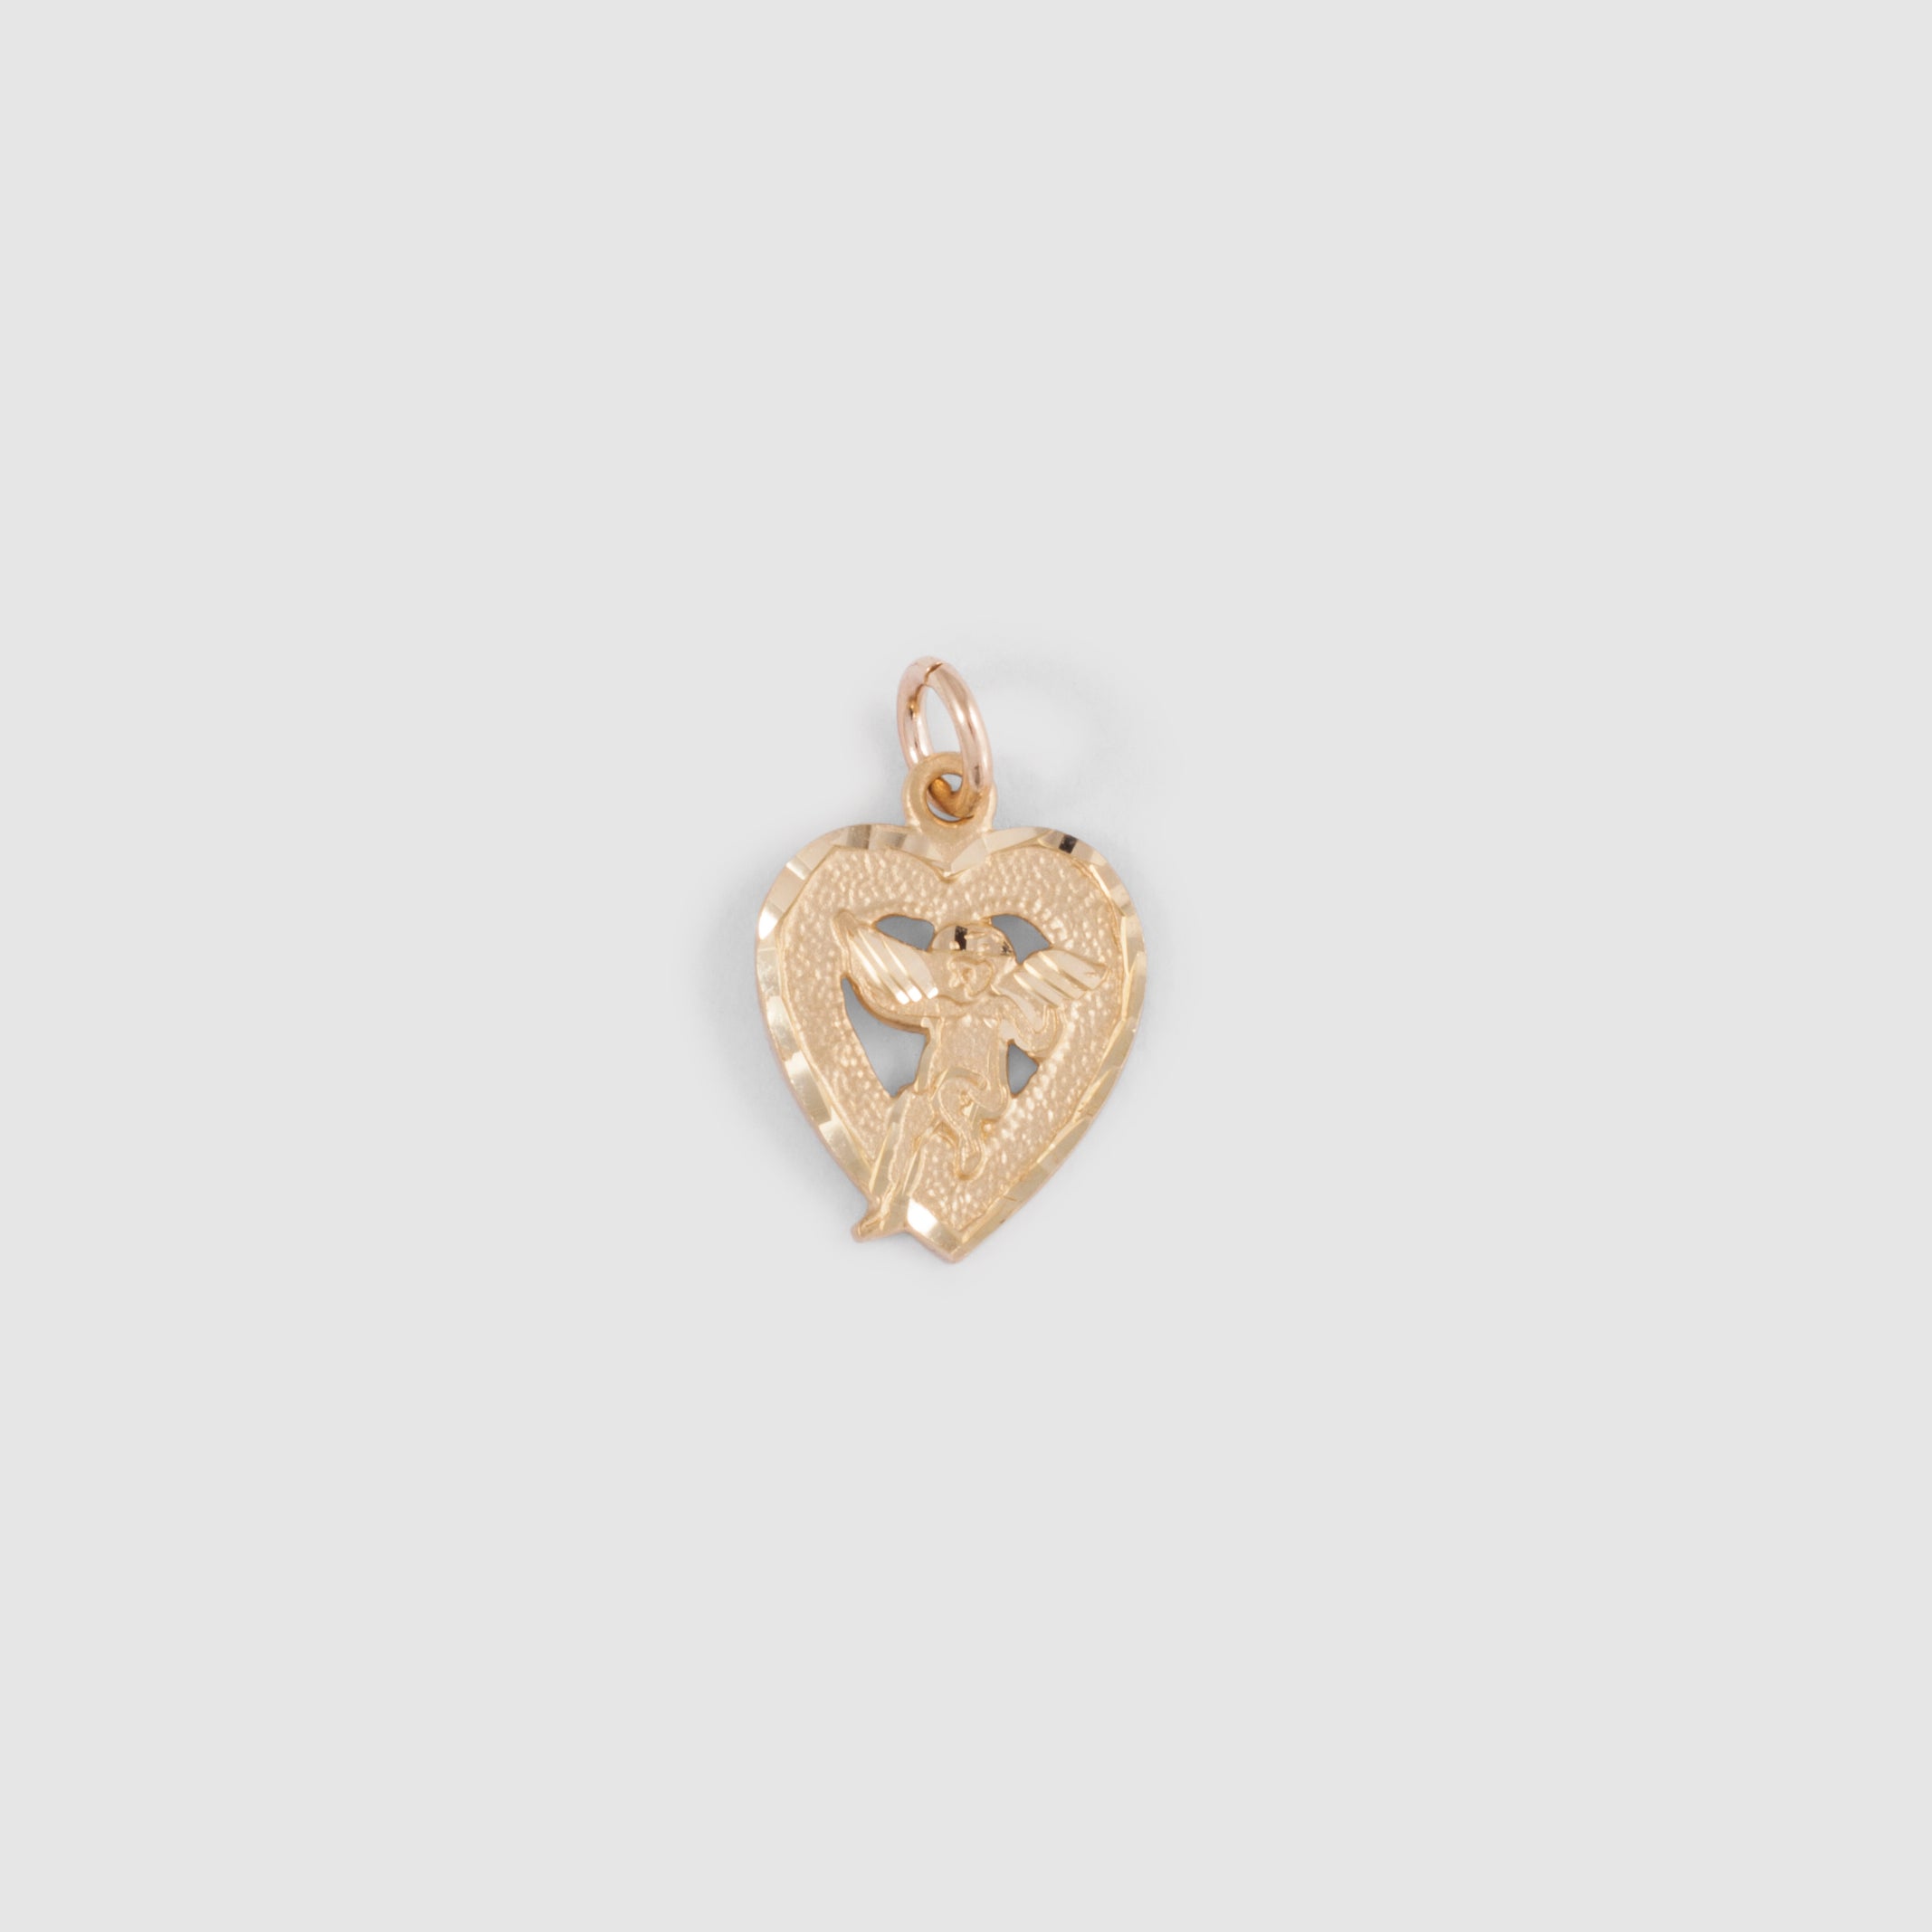 Cherub Angel sitting in a heart-shaped pendant